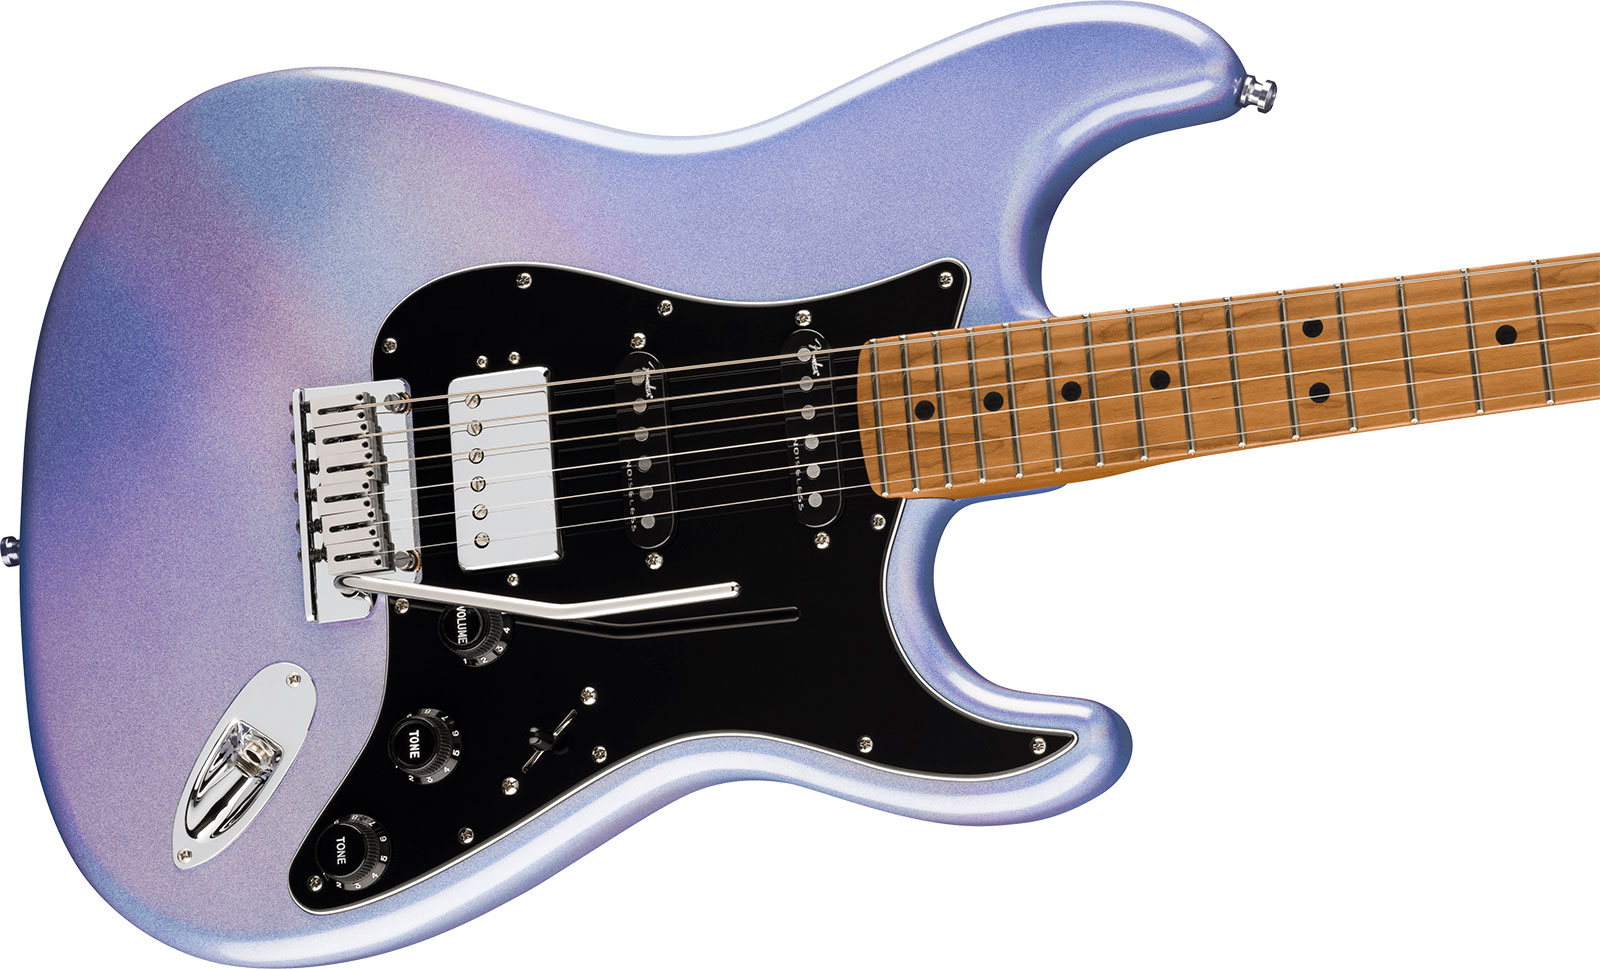 Fender Strat 70th Anniversary American Ultra Ltd Usa Hss Trem Mn - Amethyst - Str shape electric guitar - Variation 2